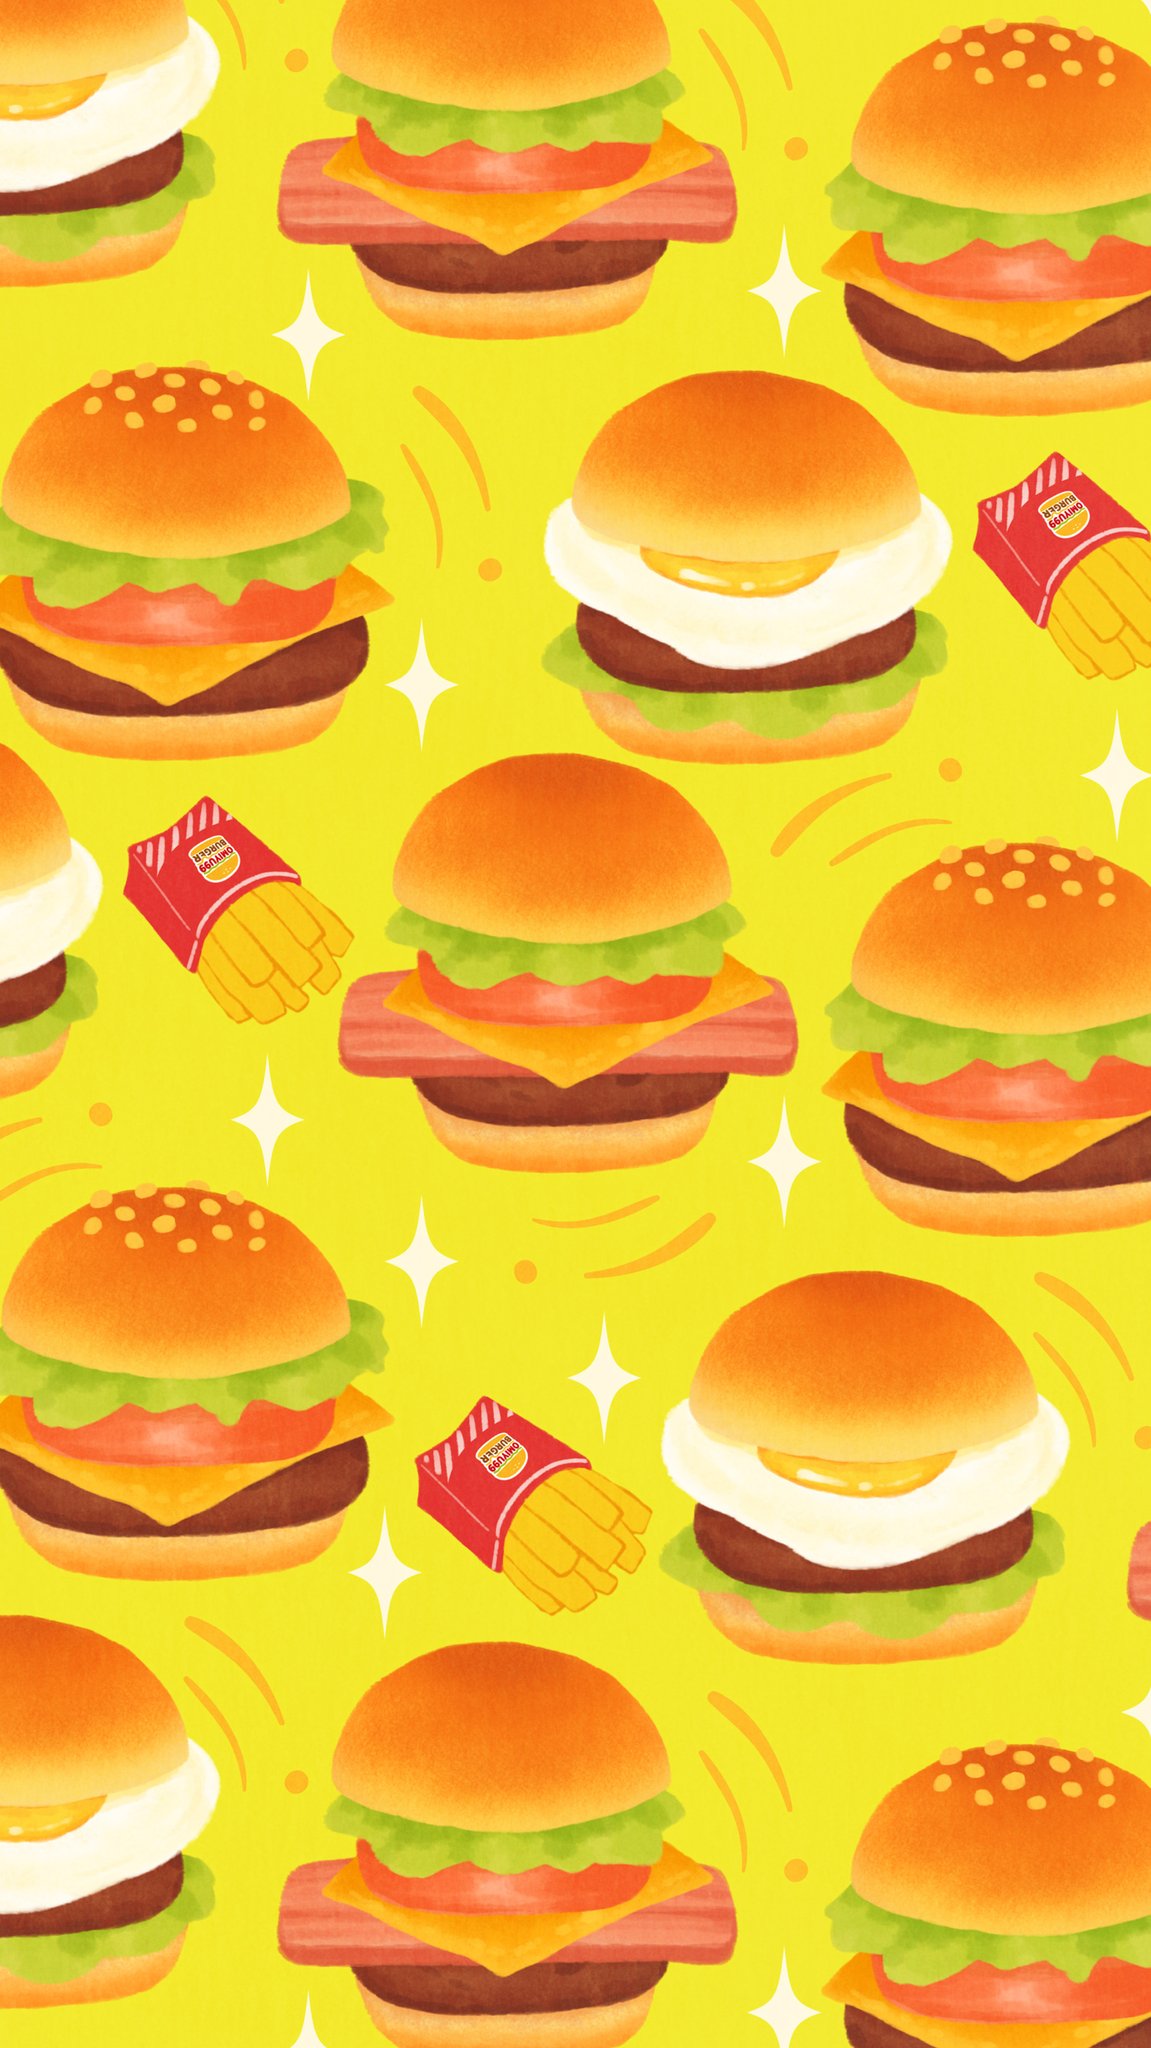 Omiyu お返事遅くなります V Twitter ハンバーガーな壁紙 Illust Illustration 壁紙 イラスト Iphone壁紙 ハンバーガー Blt Hamburger